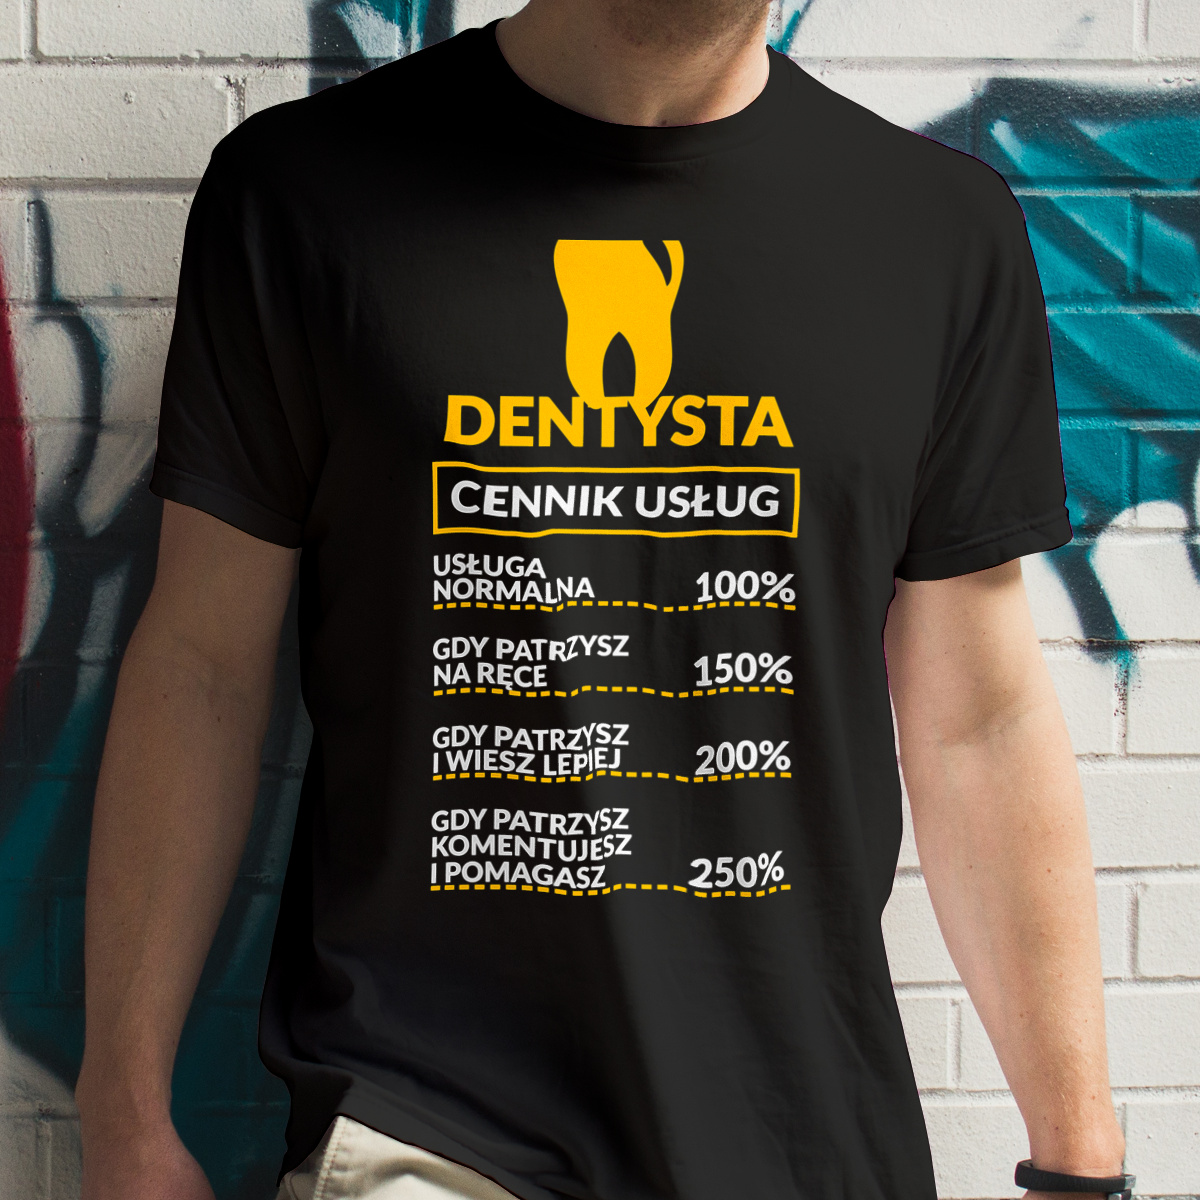 Dentysta - Cennik Usług - Męska Koszulka Czarna